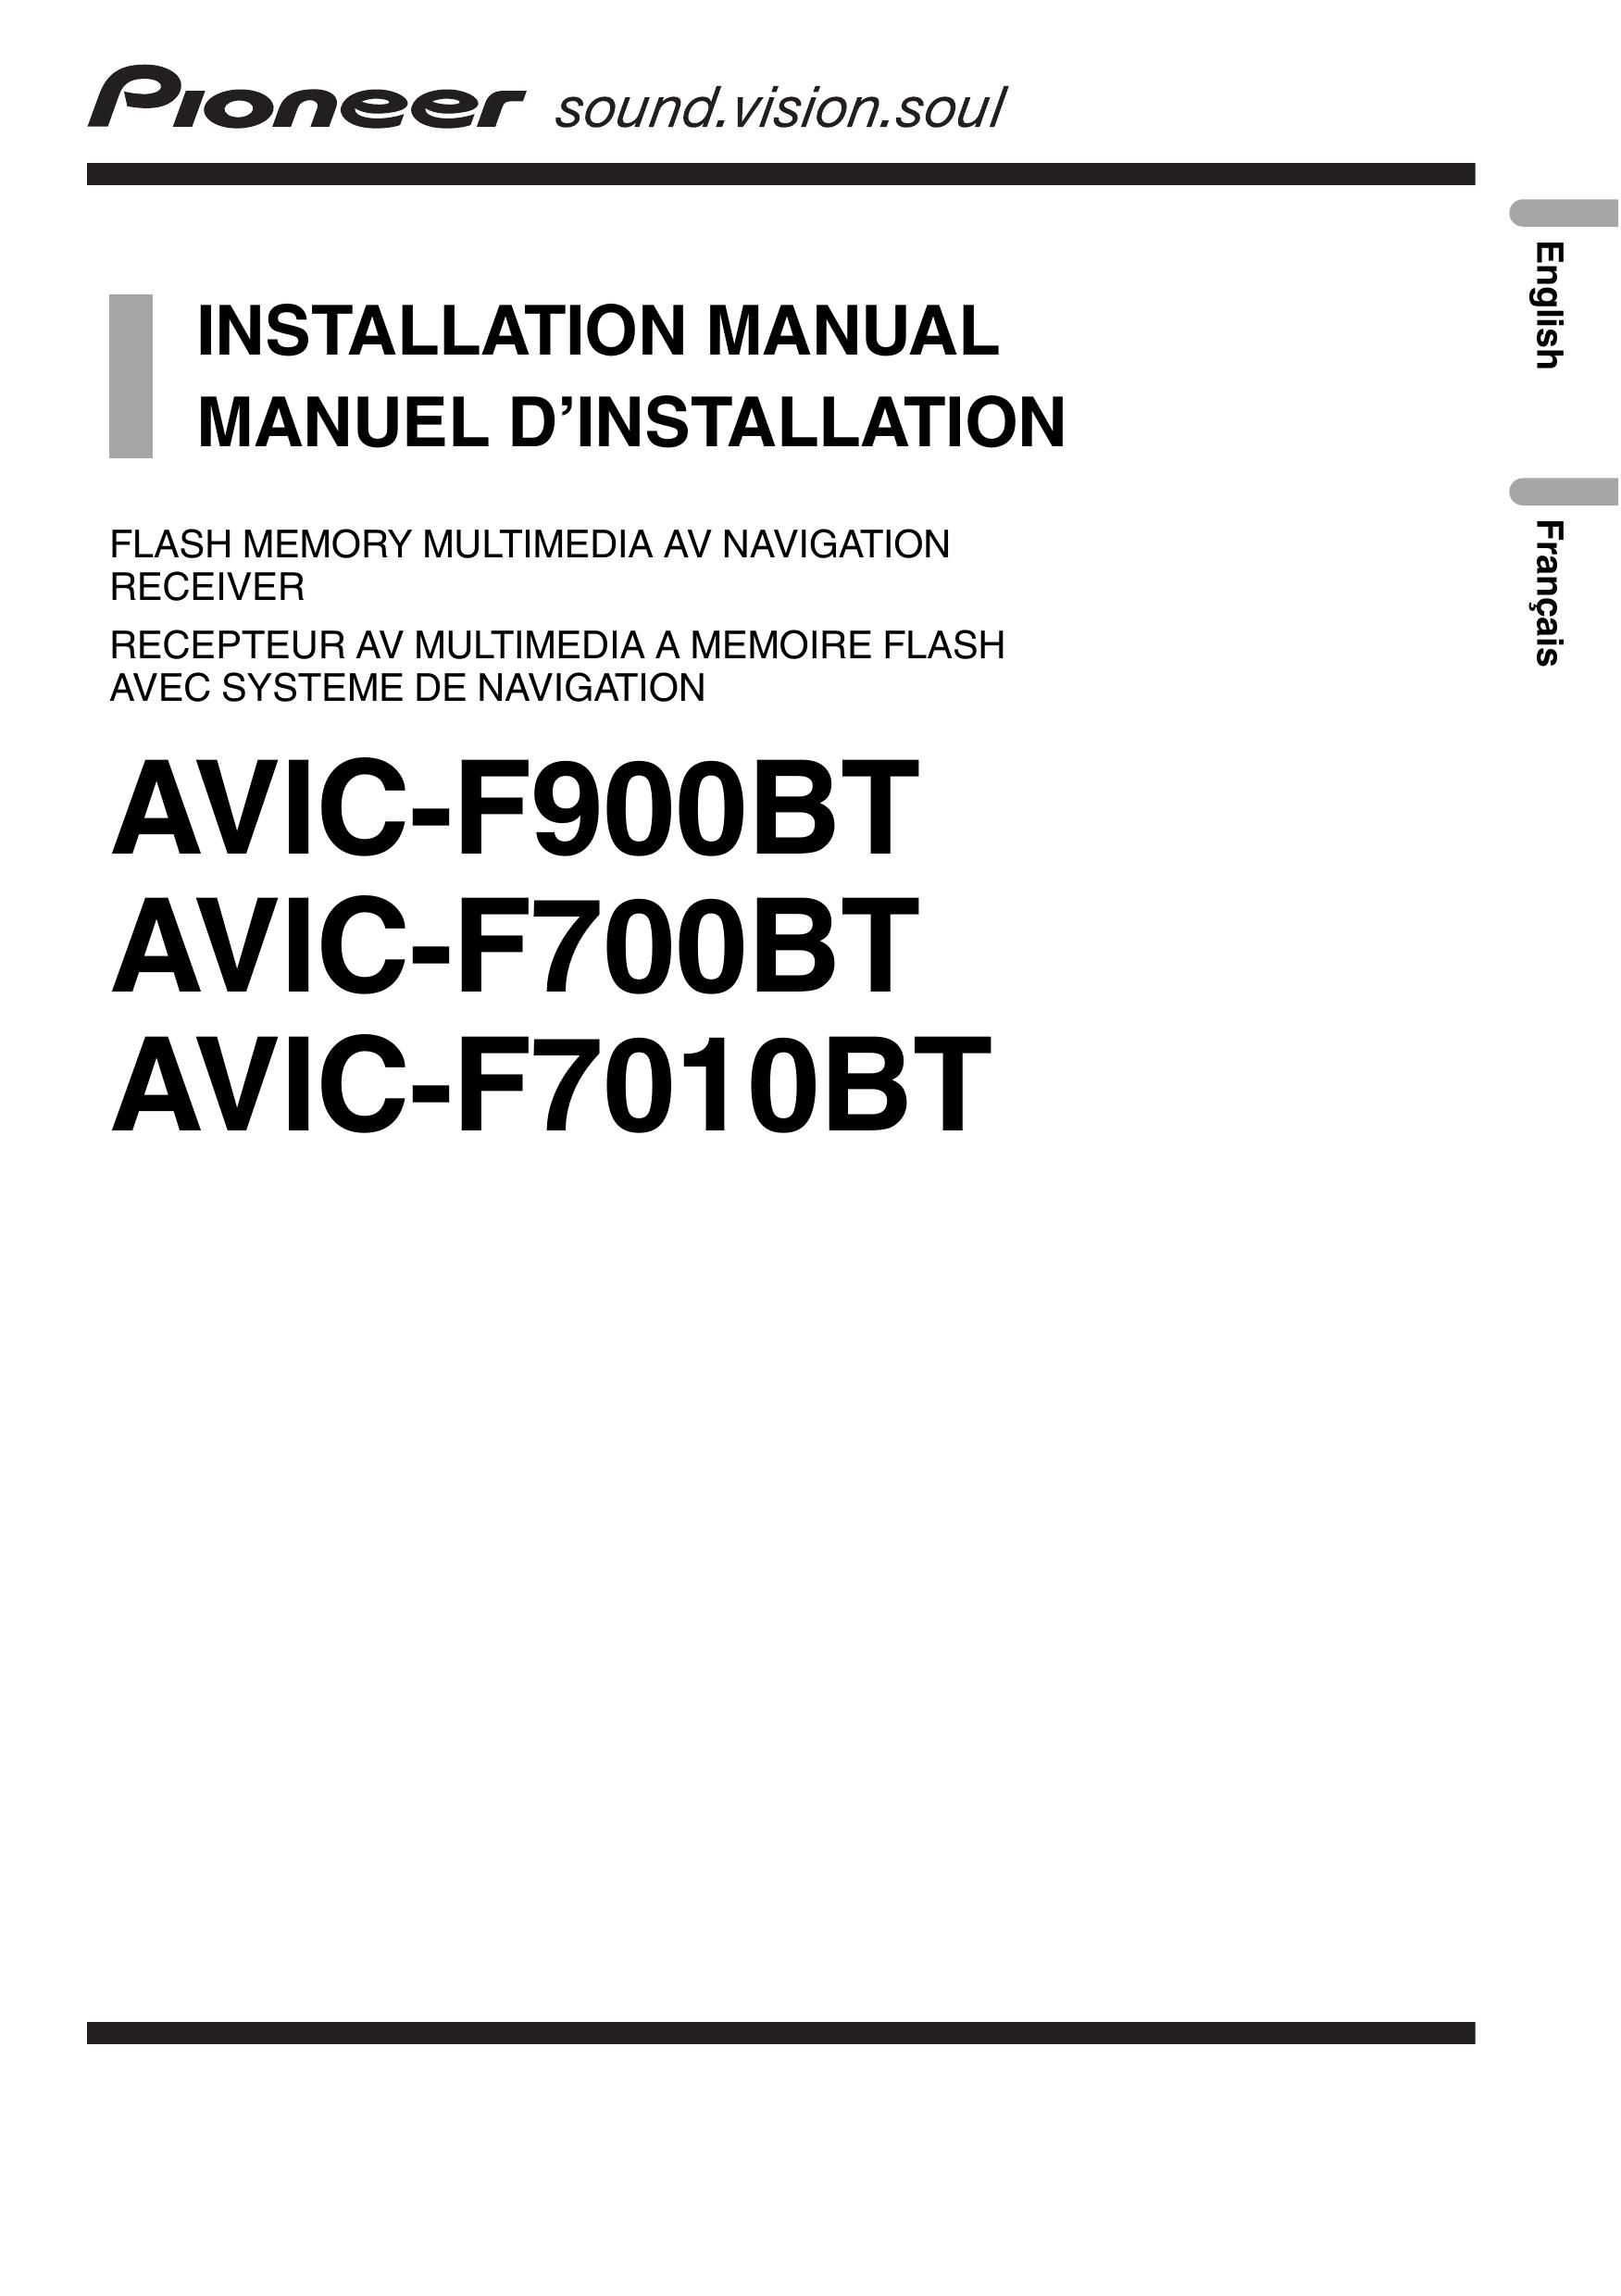 Pioneer AVIC-F7010BT Camera Accessories User Manual